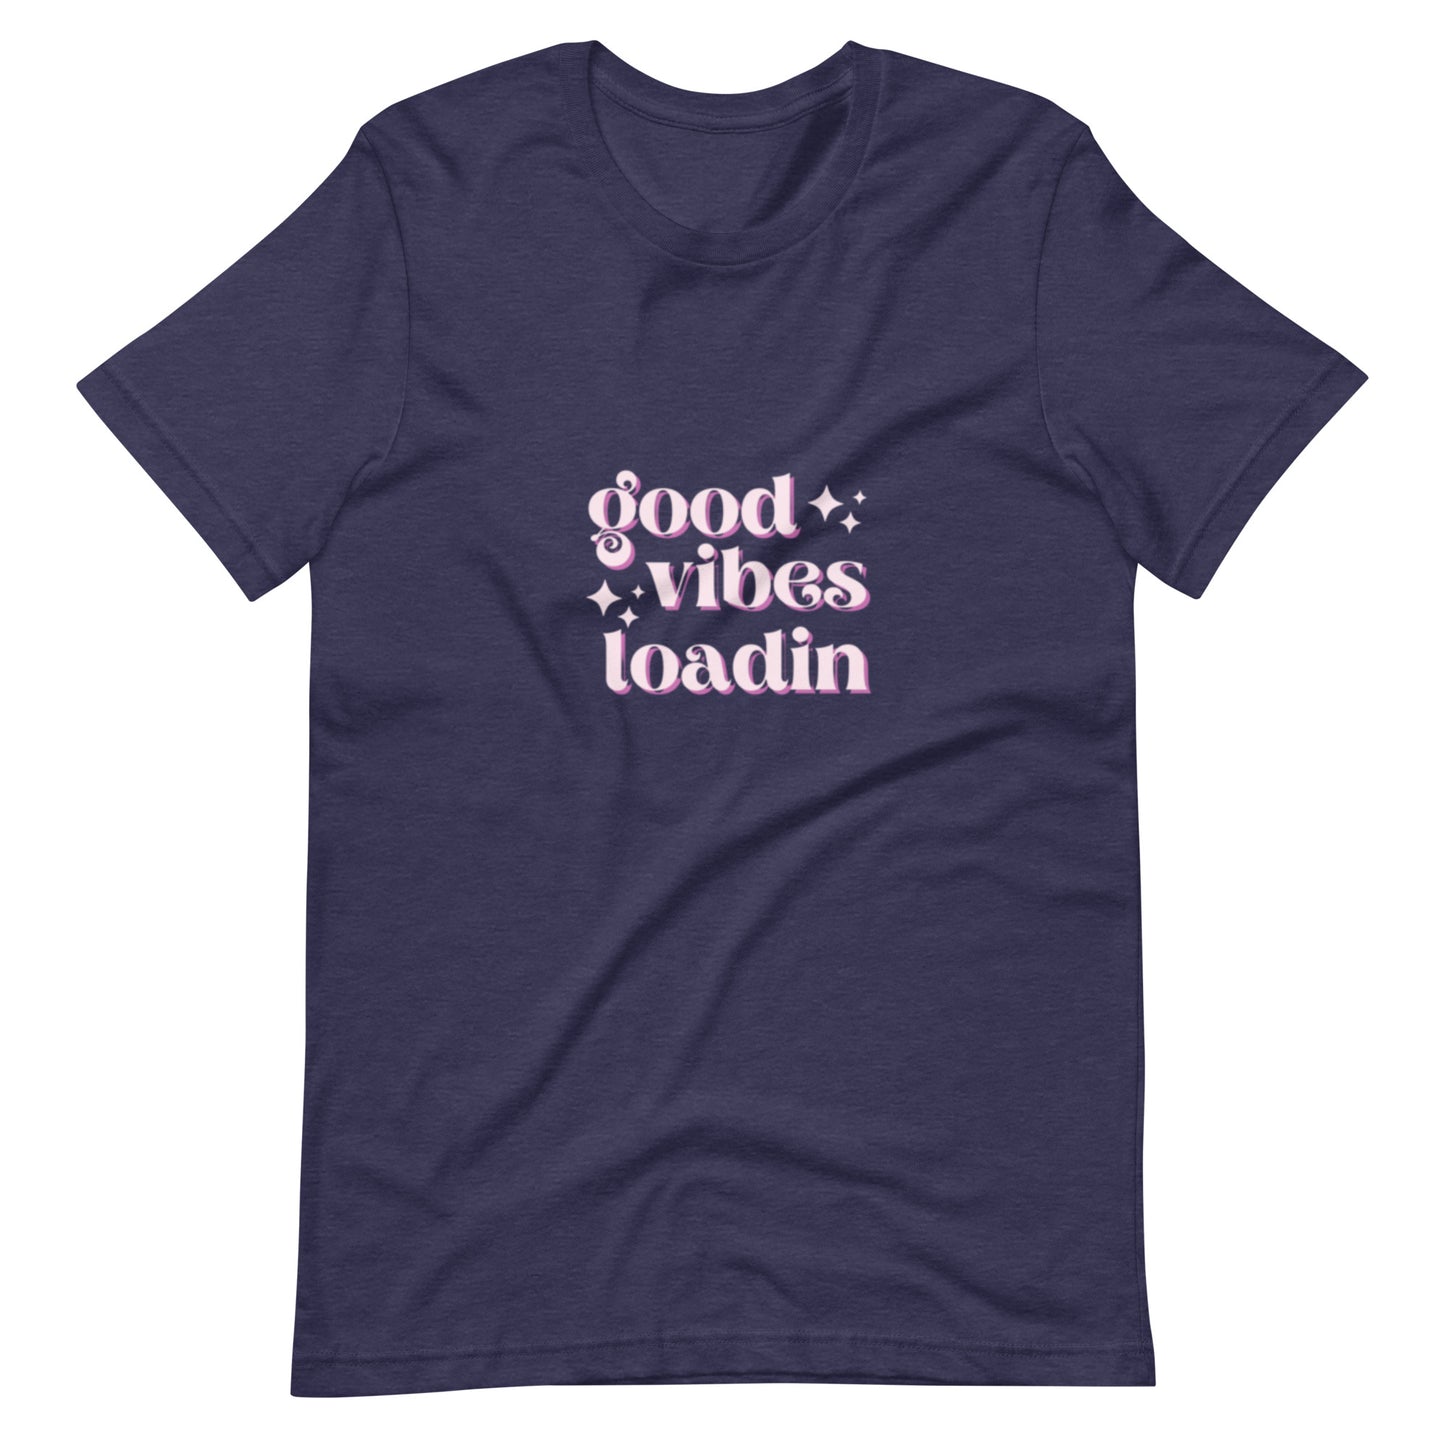 Good vibes loadin T-shirt